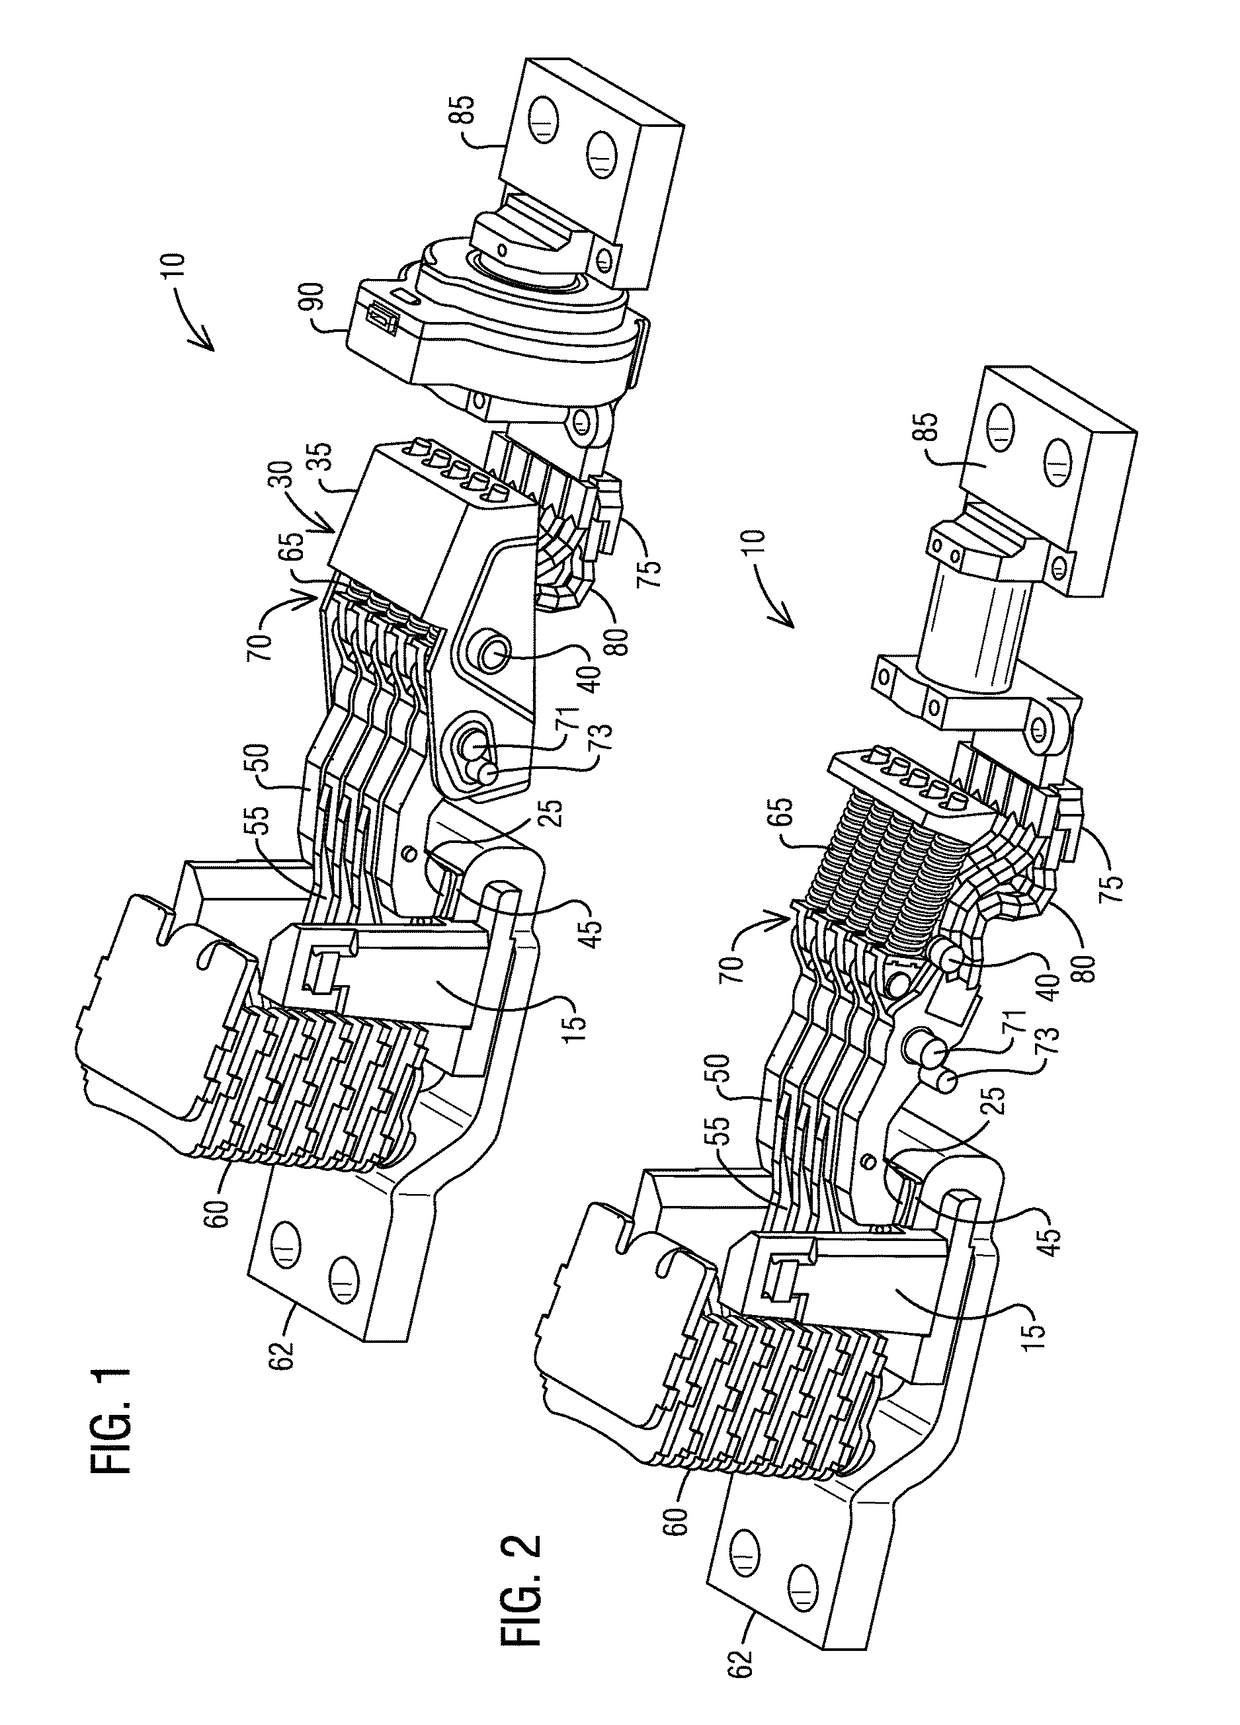 Slot motor configuration for high amperage multi-finger circuit breaker